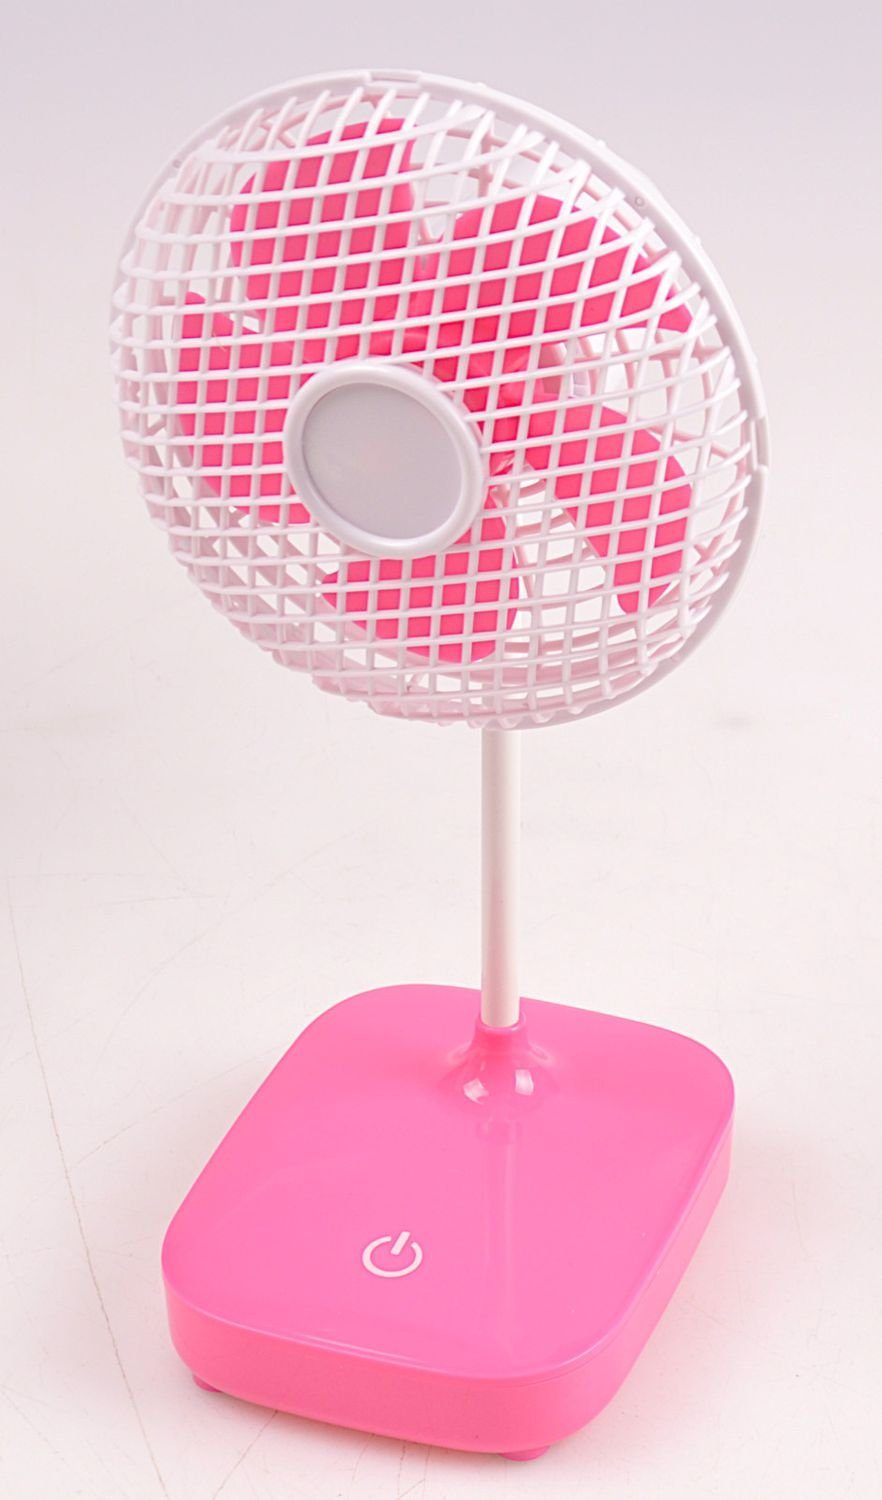 BURI Standventilator Mini-Ventilator Ø13cm Gebläse rosa Kühler Lüfter Tischventilator